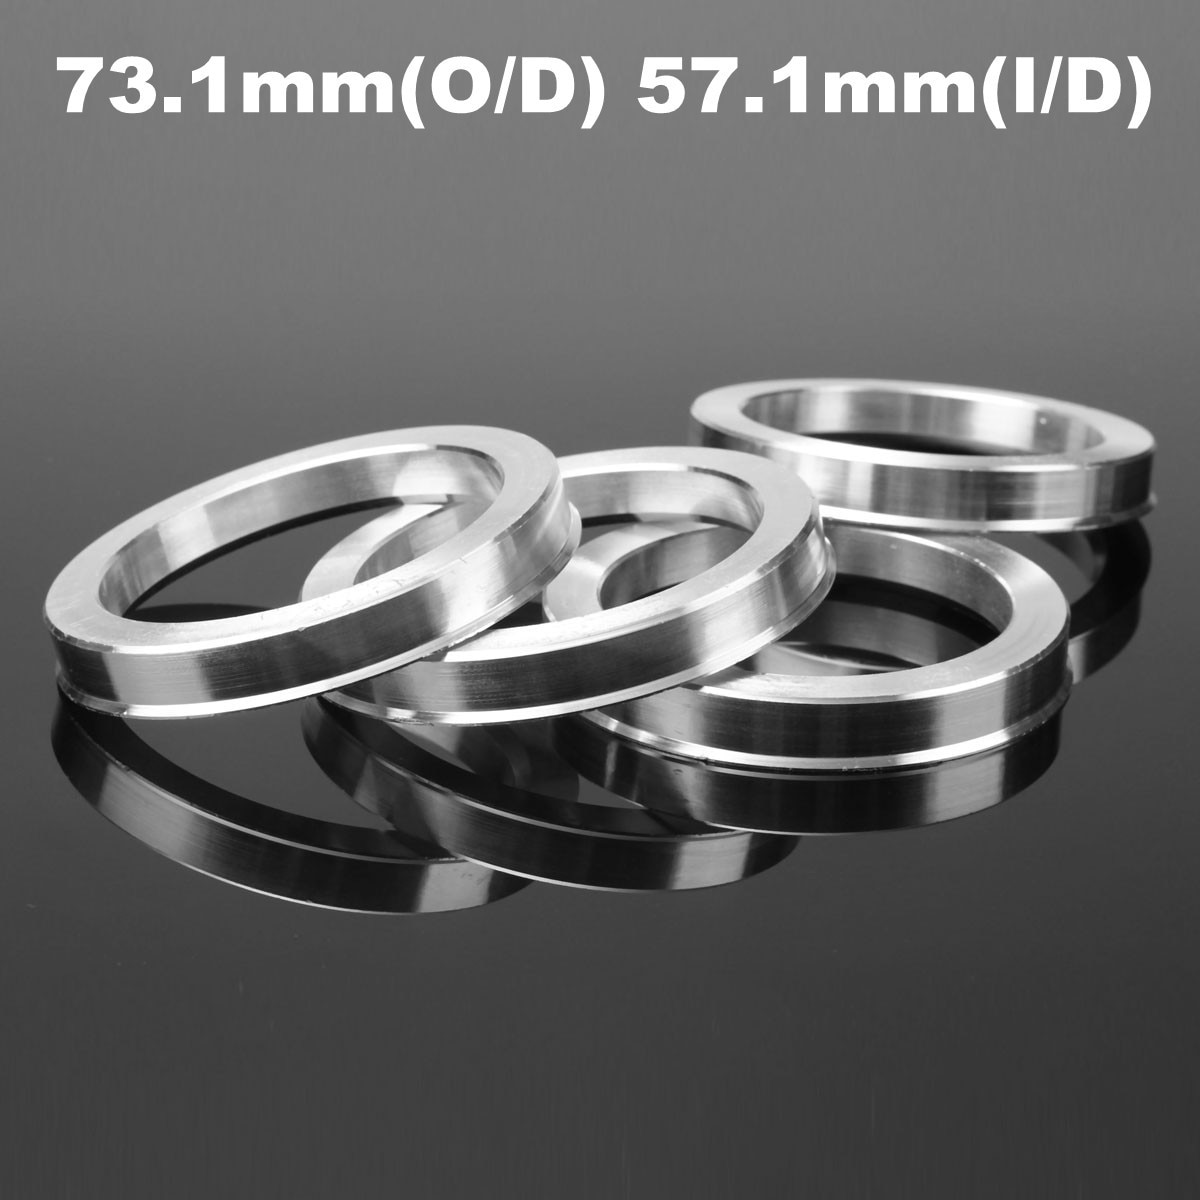 4 stk 73.1mm-57.1mm universalt aluminiumnav centreret ringhjulafstands sæt 73.1mm o /d 57.1mm i / d